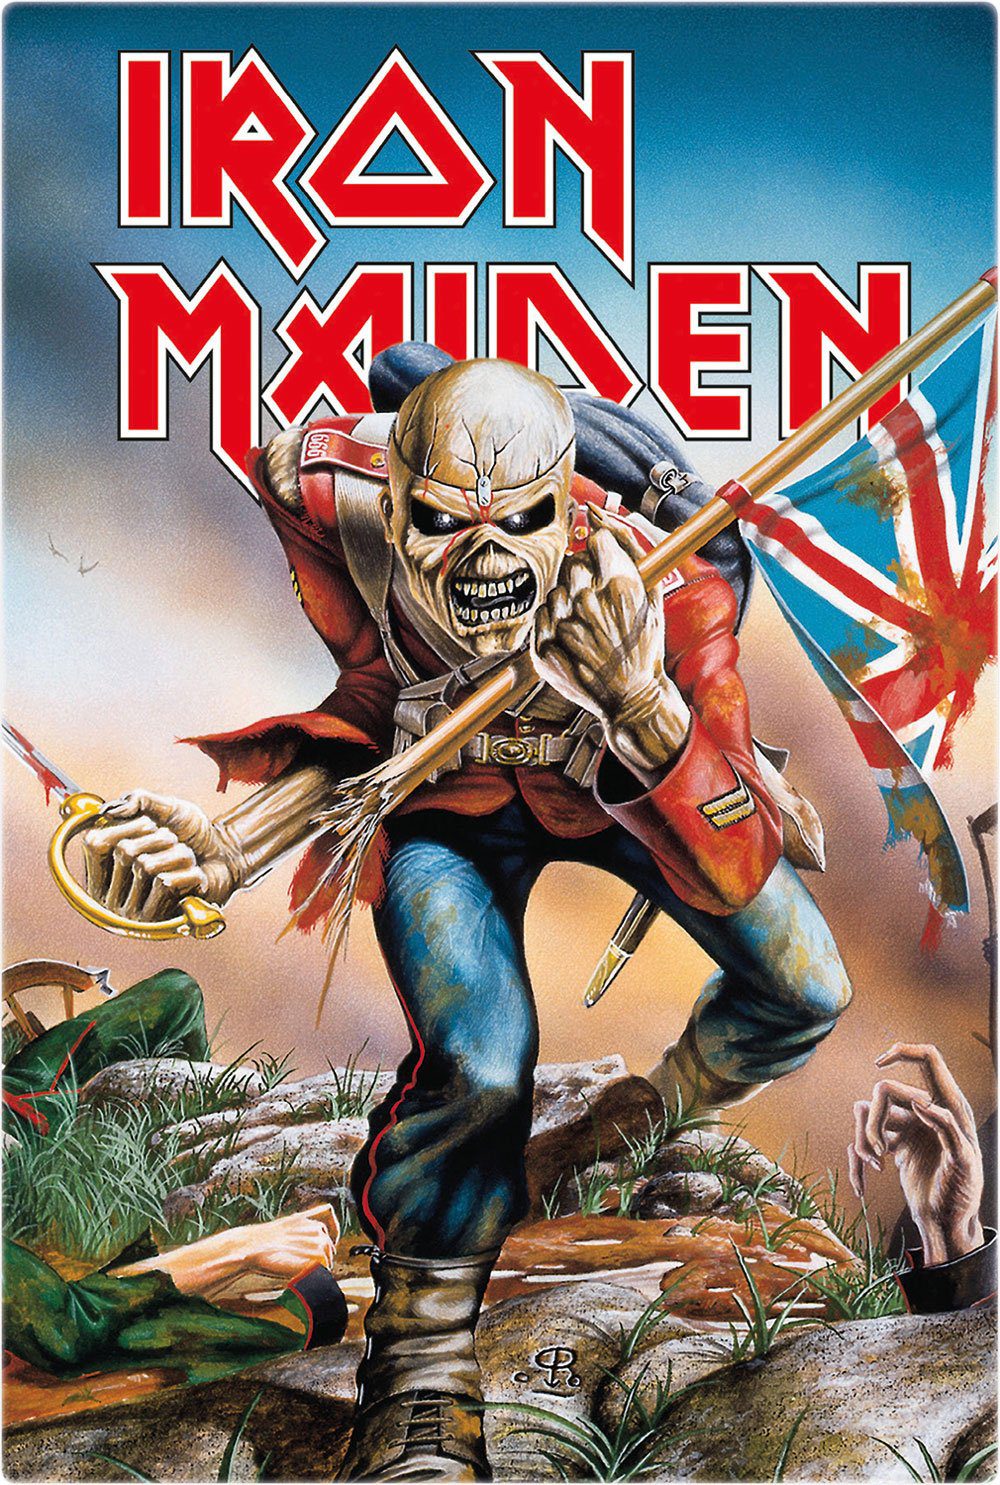 Placa de Chapa Trooper Iron Maiden 20 x 30 cm - Collector4u.com